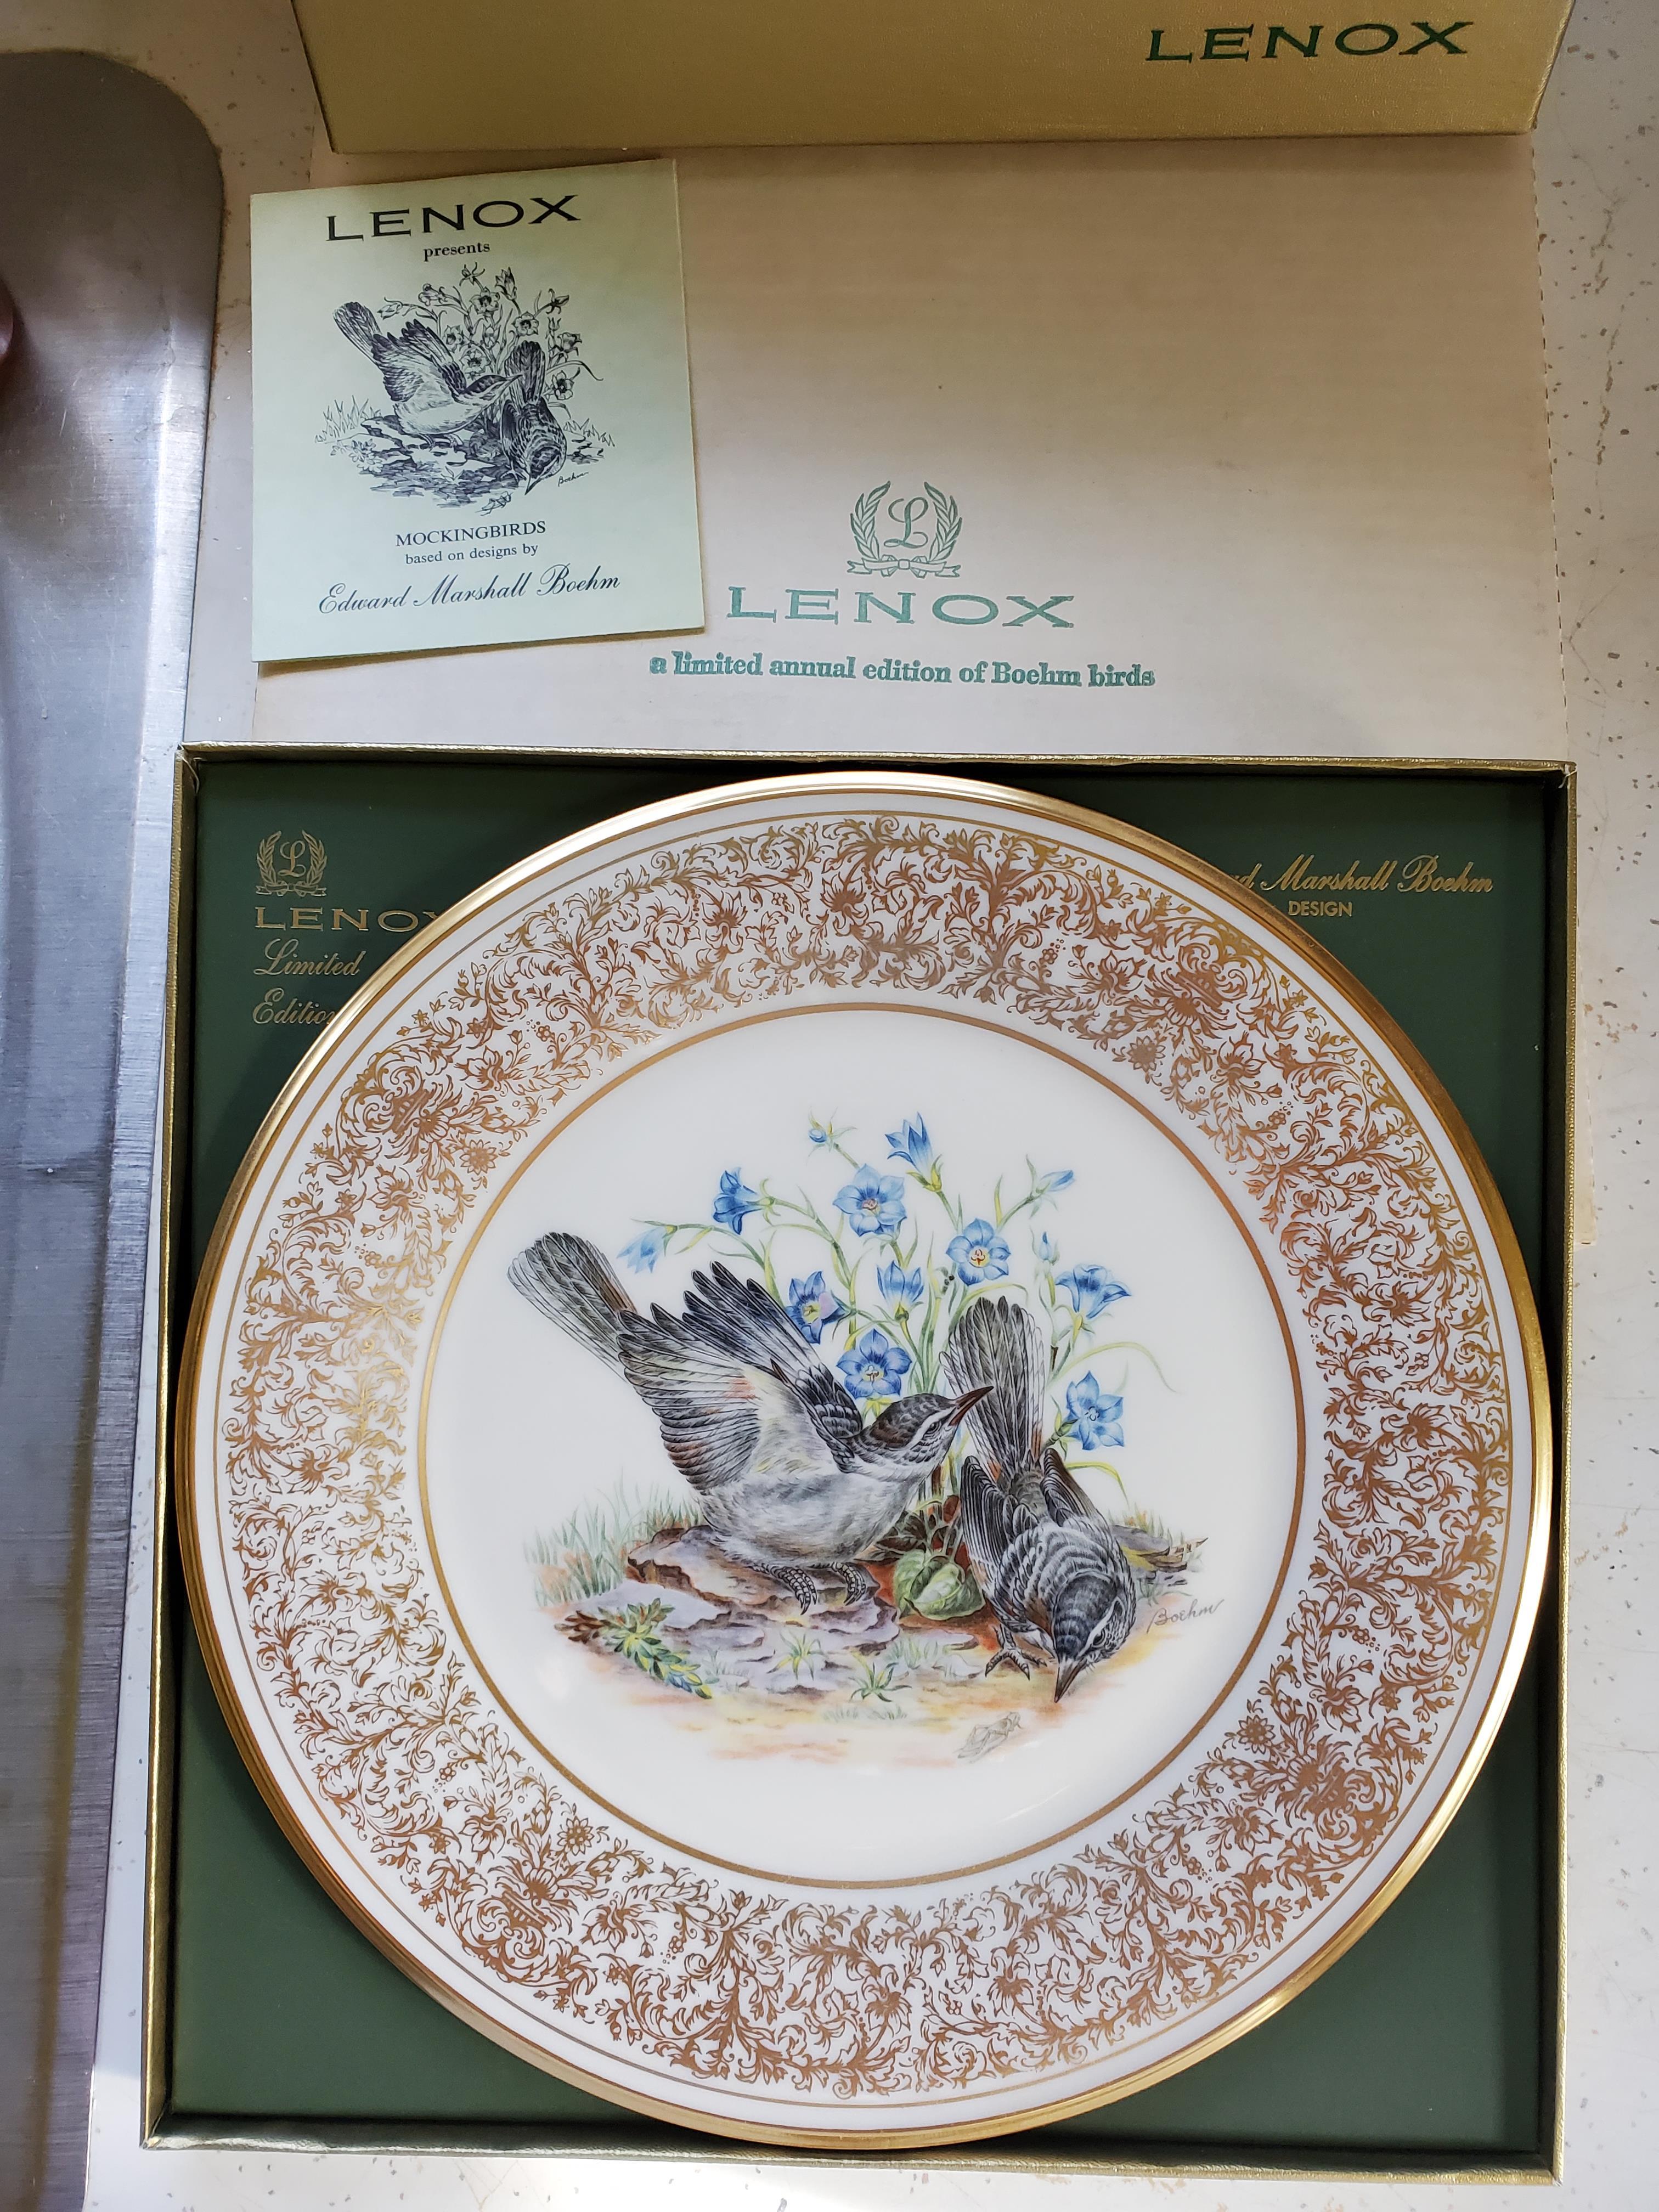 1978 Lenox Boehm Mockingbirds plate